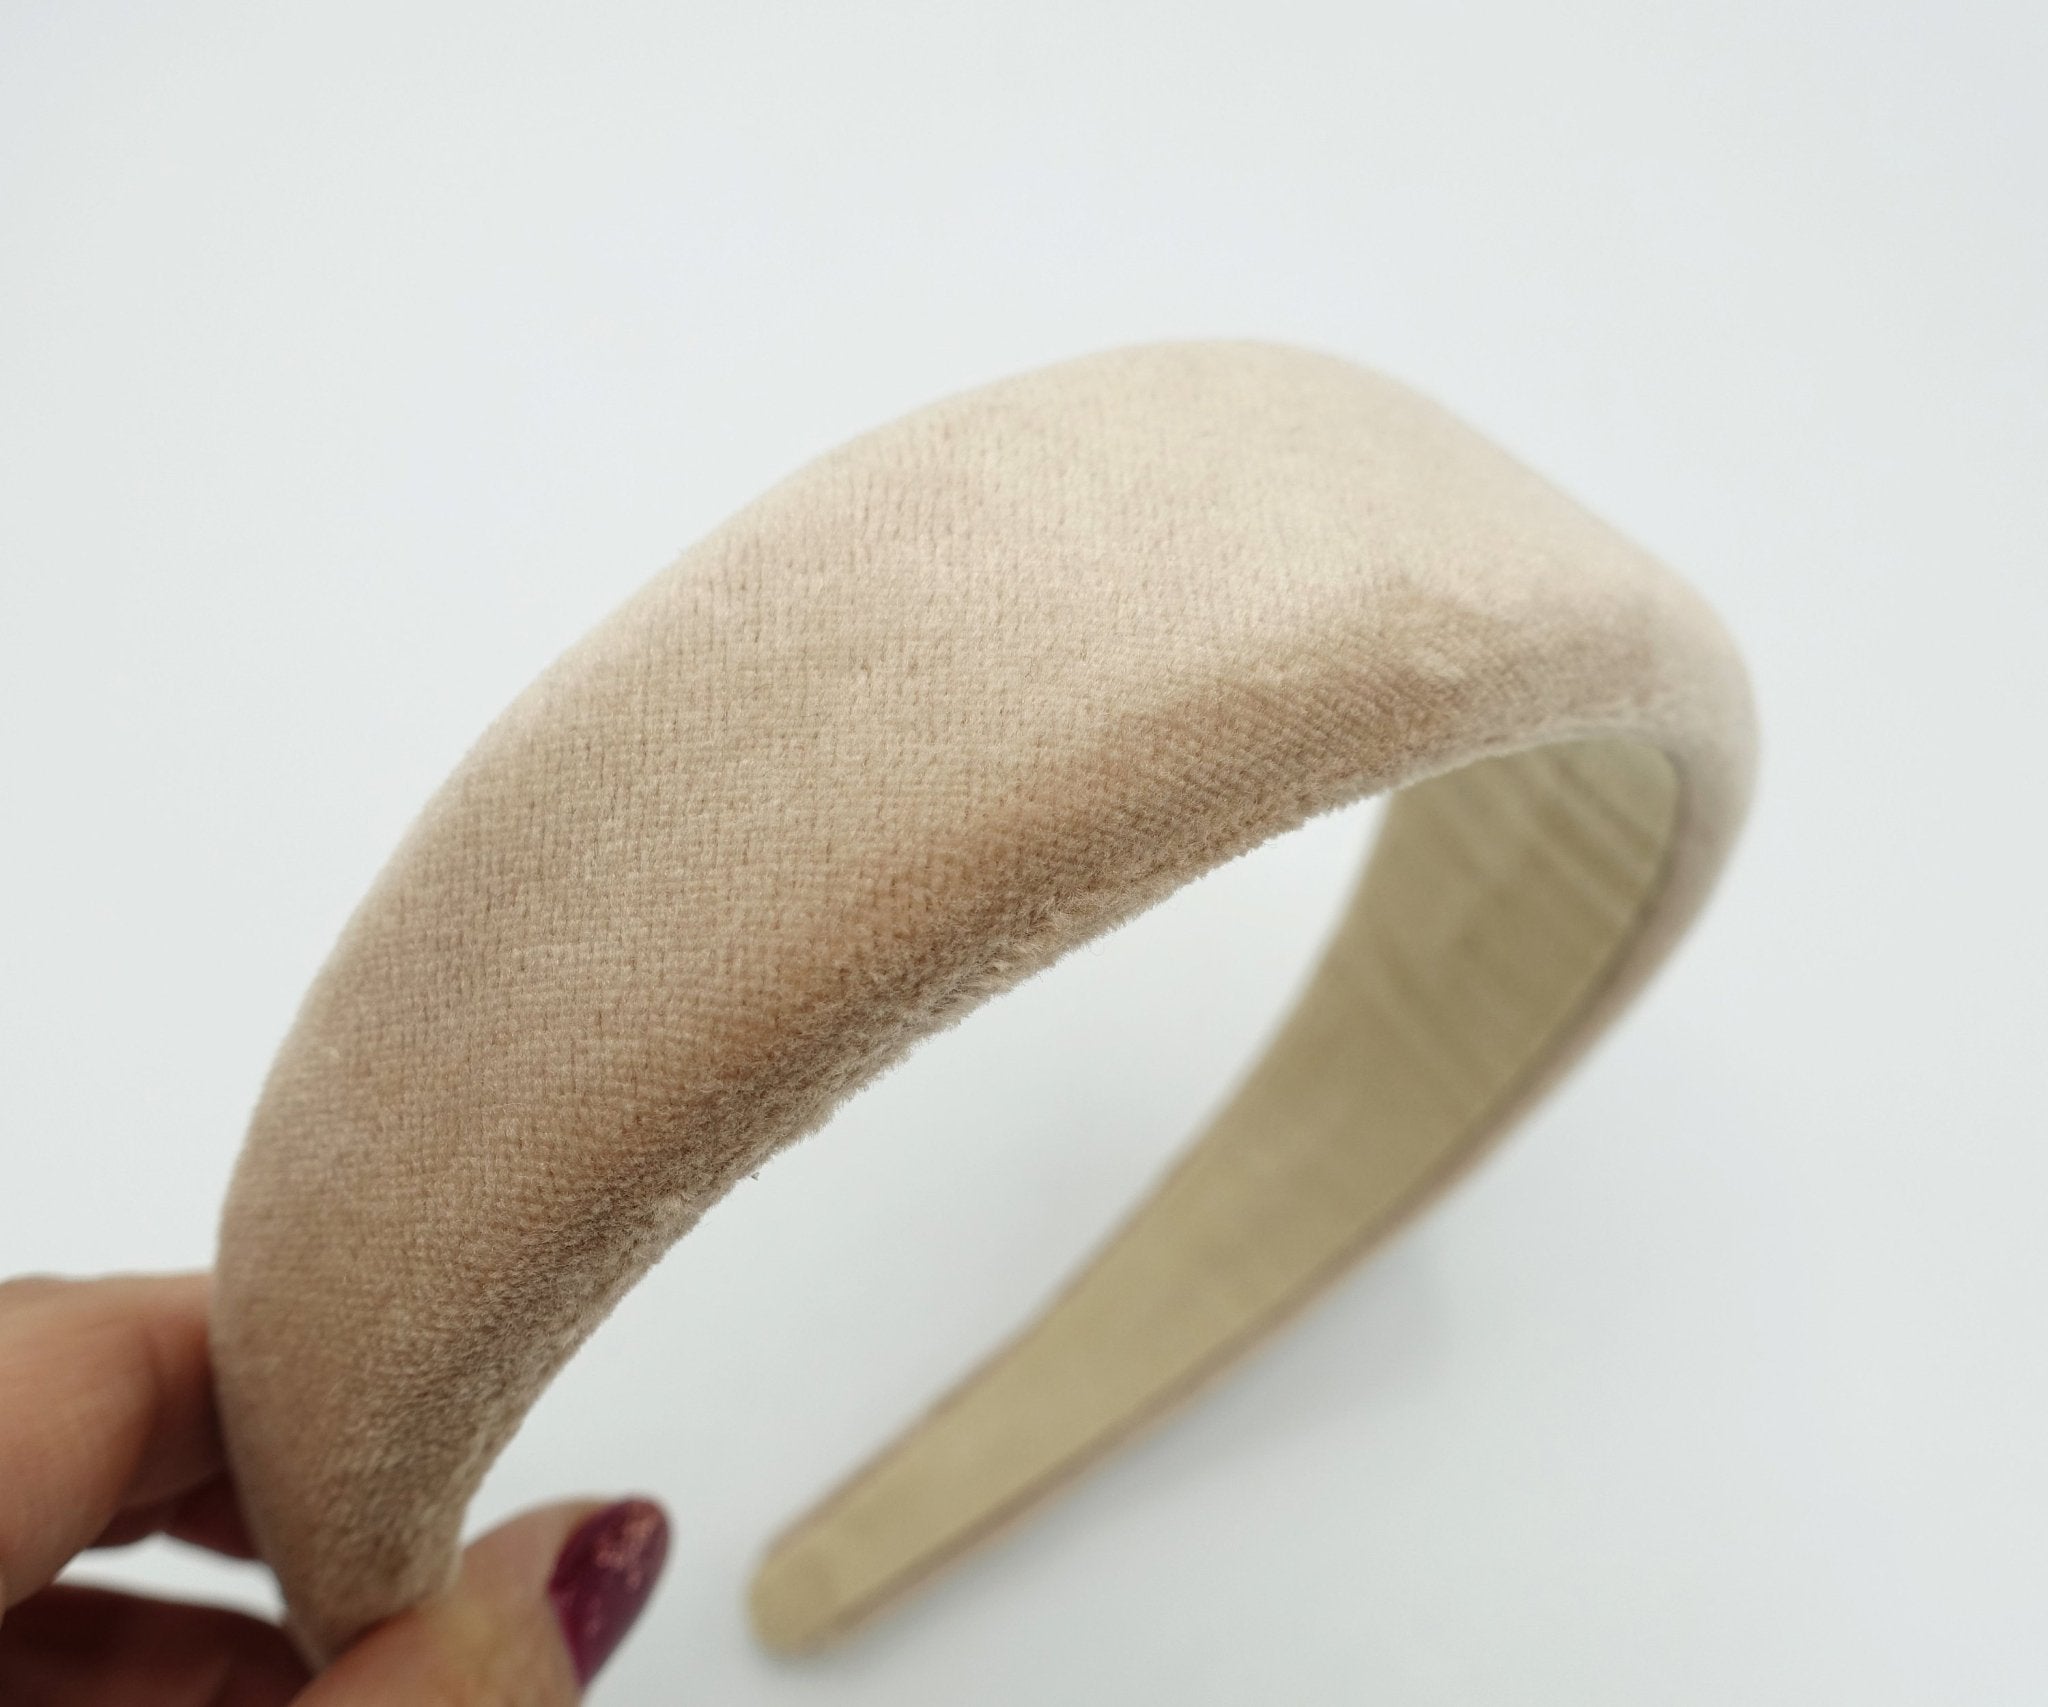 VeryShine cotton velvet headband padded hairband Fall Winter hair accessory for women